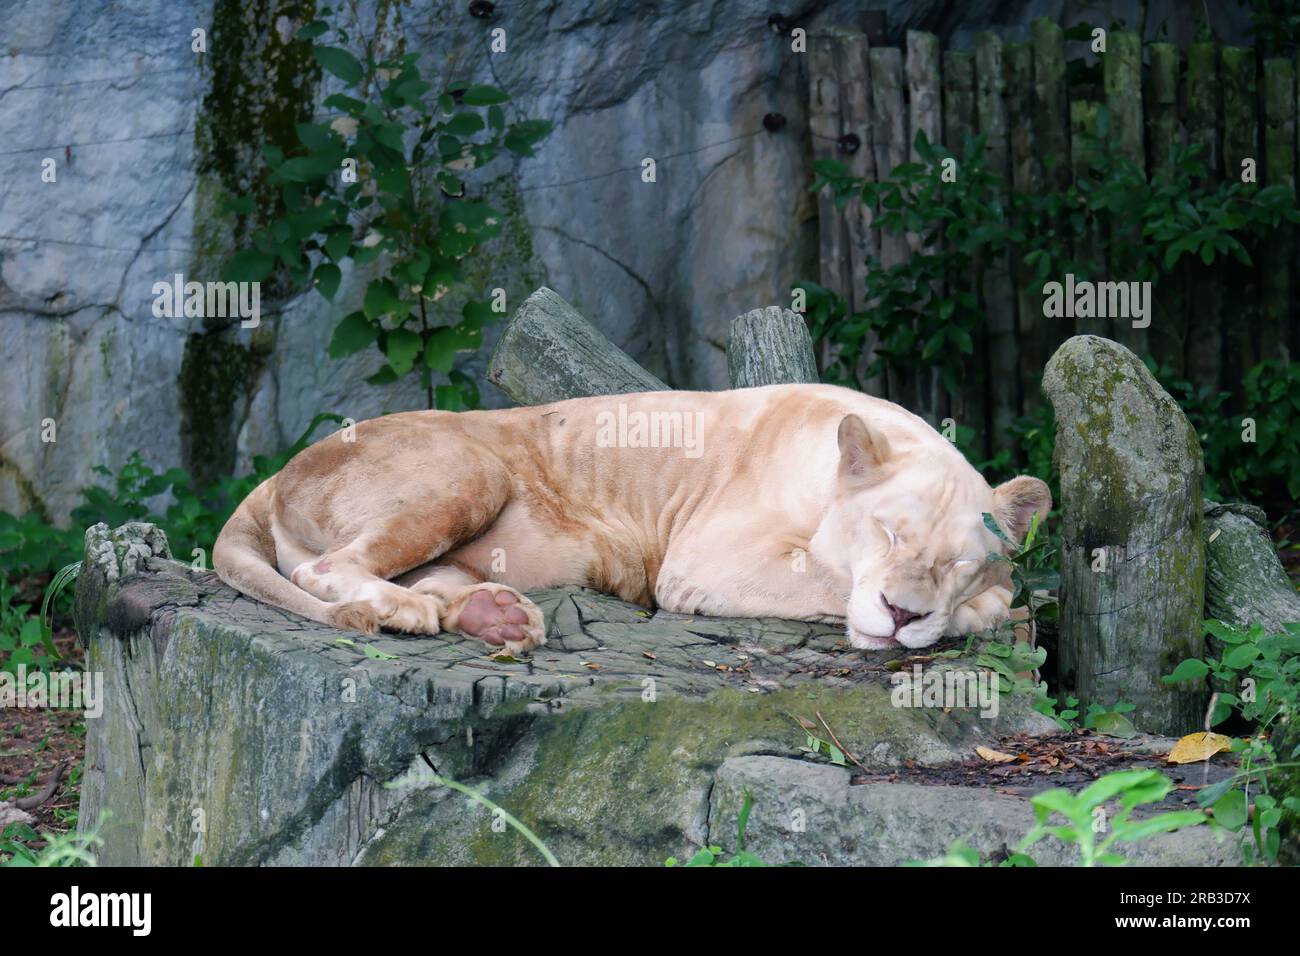 Une femme lion dort dans l'herbe verte. Banque D'Images